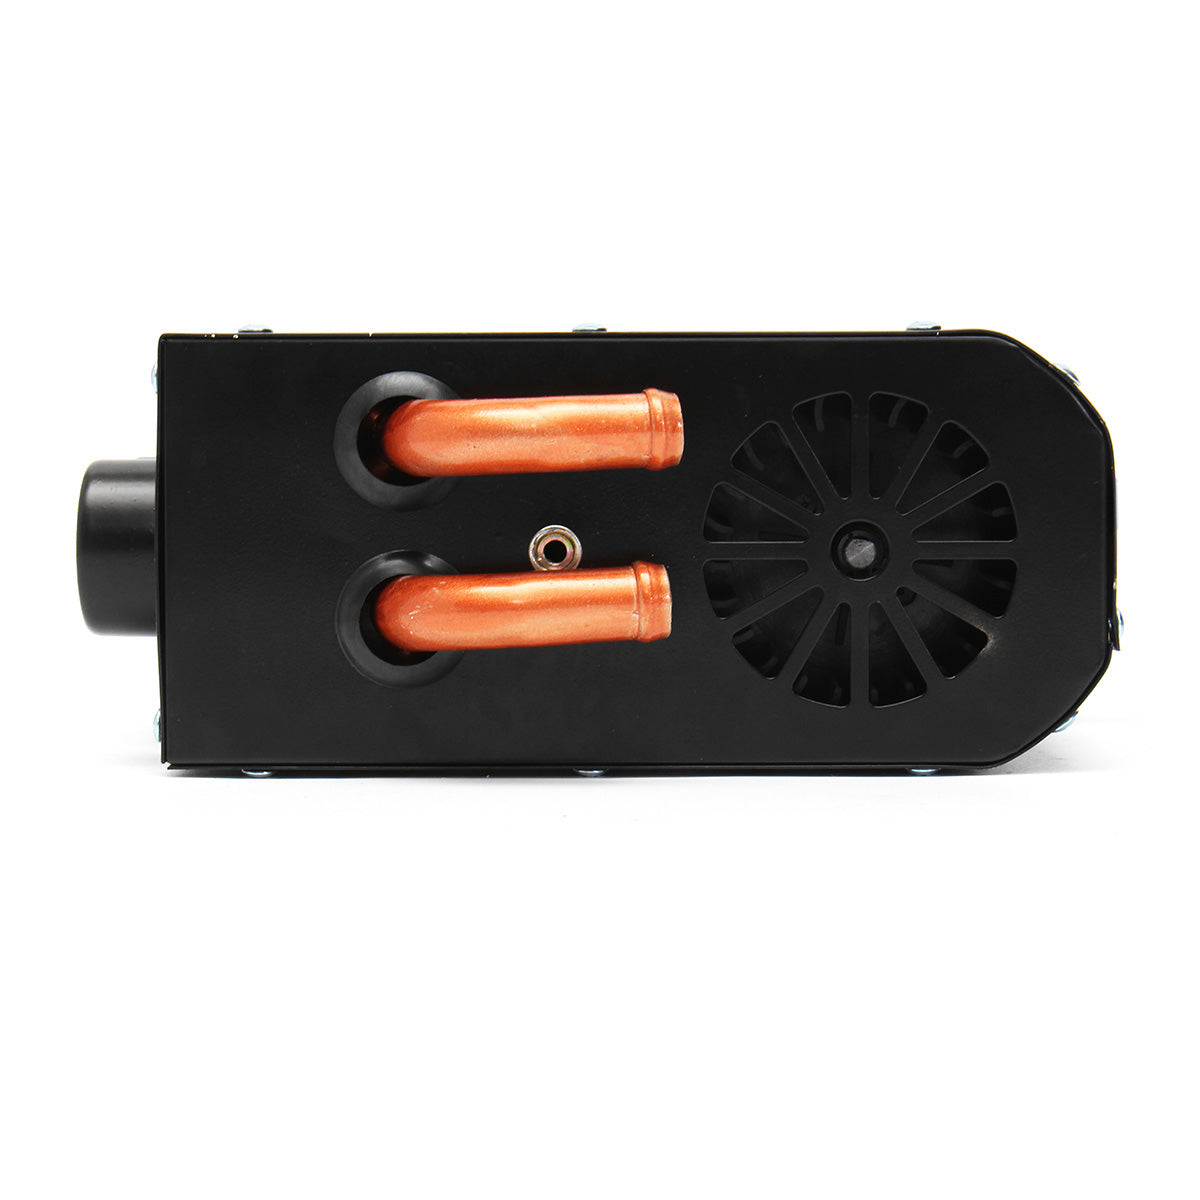 Coral 12V Vehicle Car Heater 4 Hole Defogging And Defrosting Car Heater